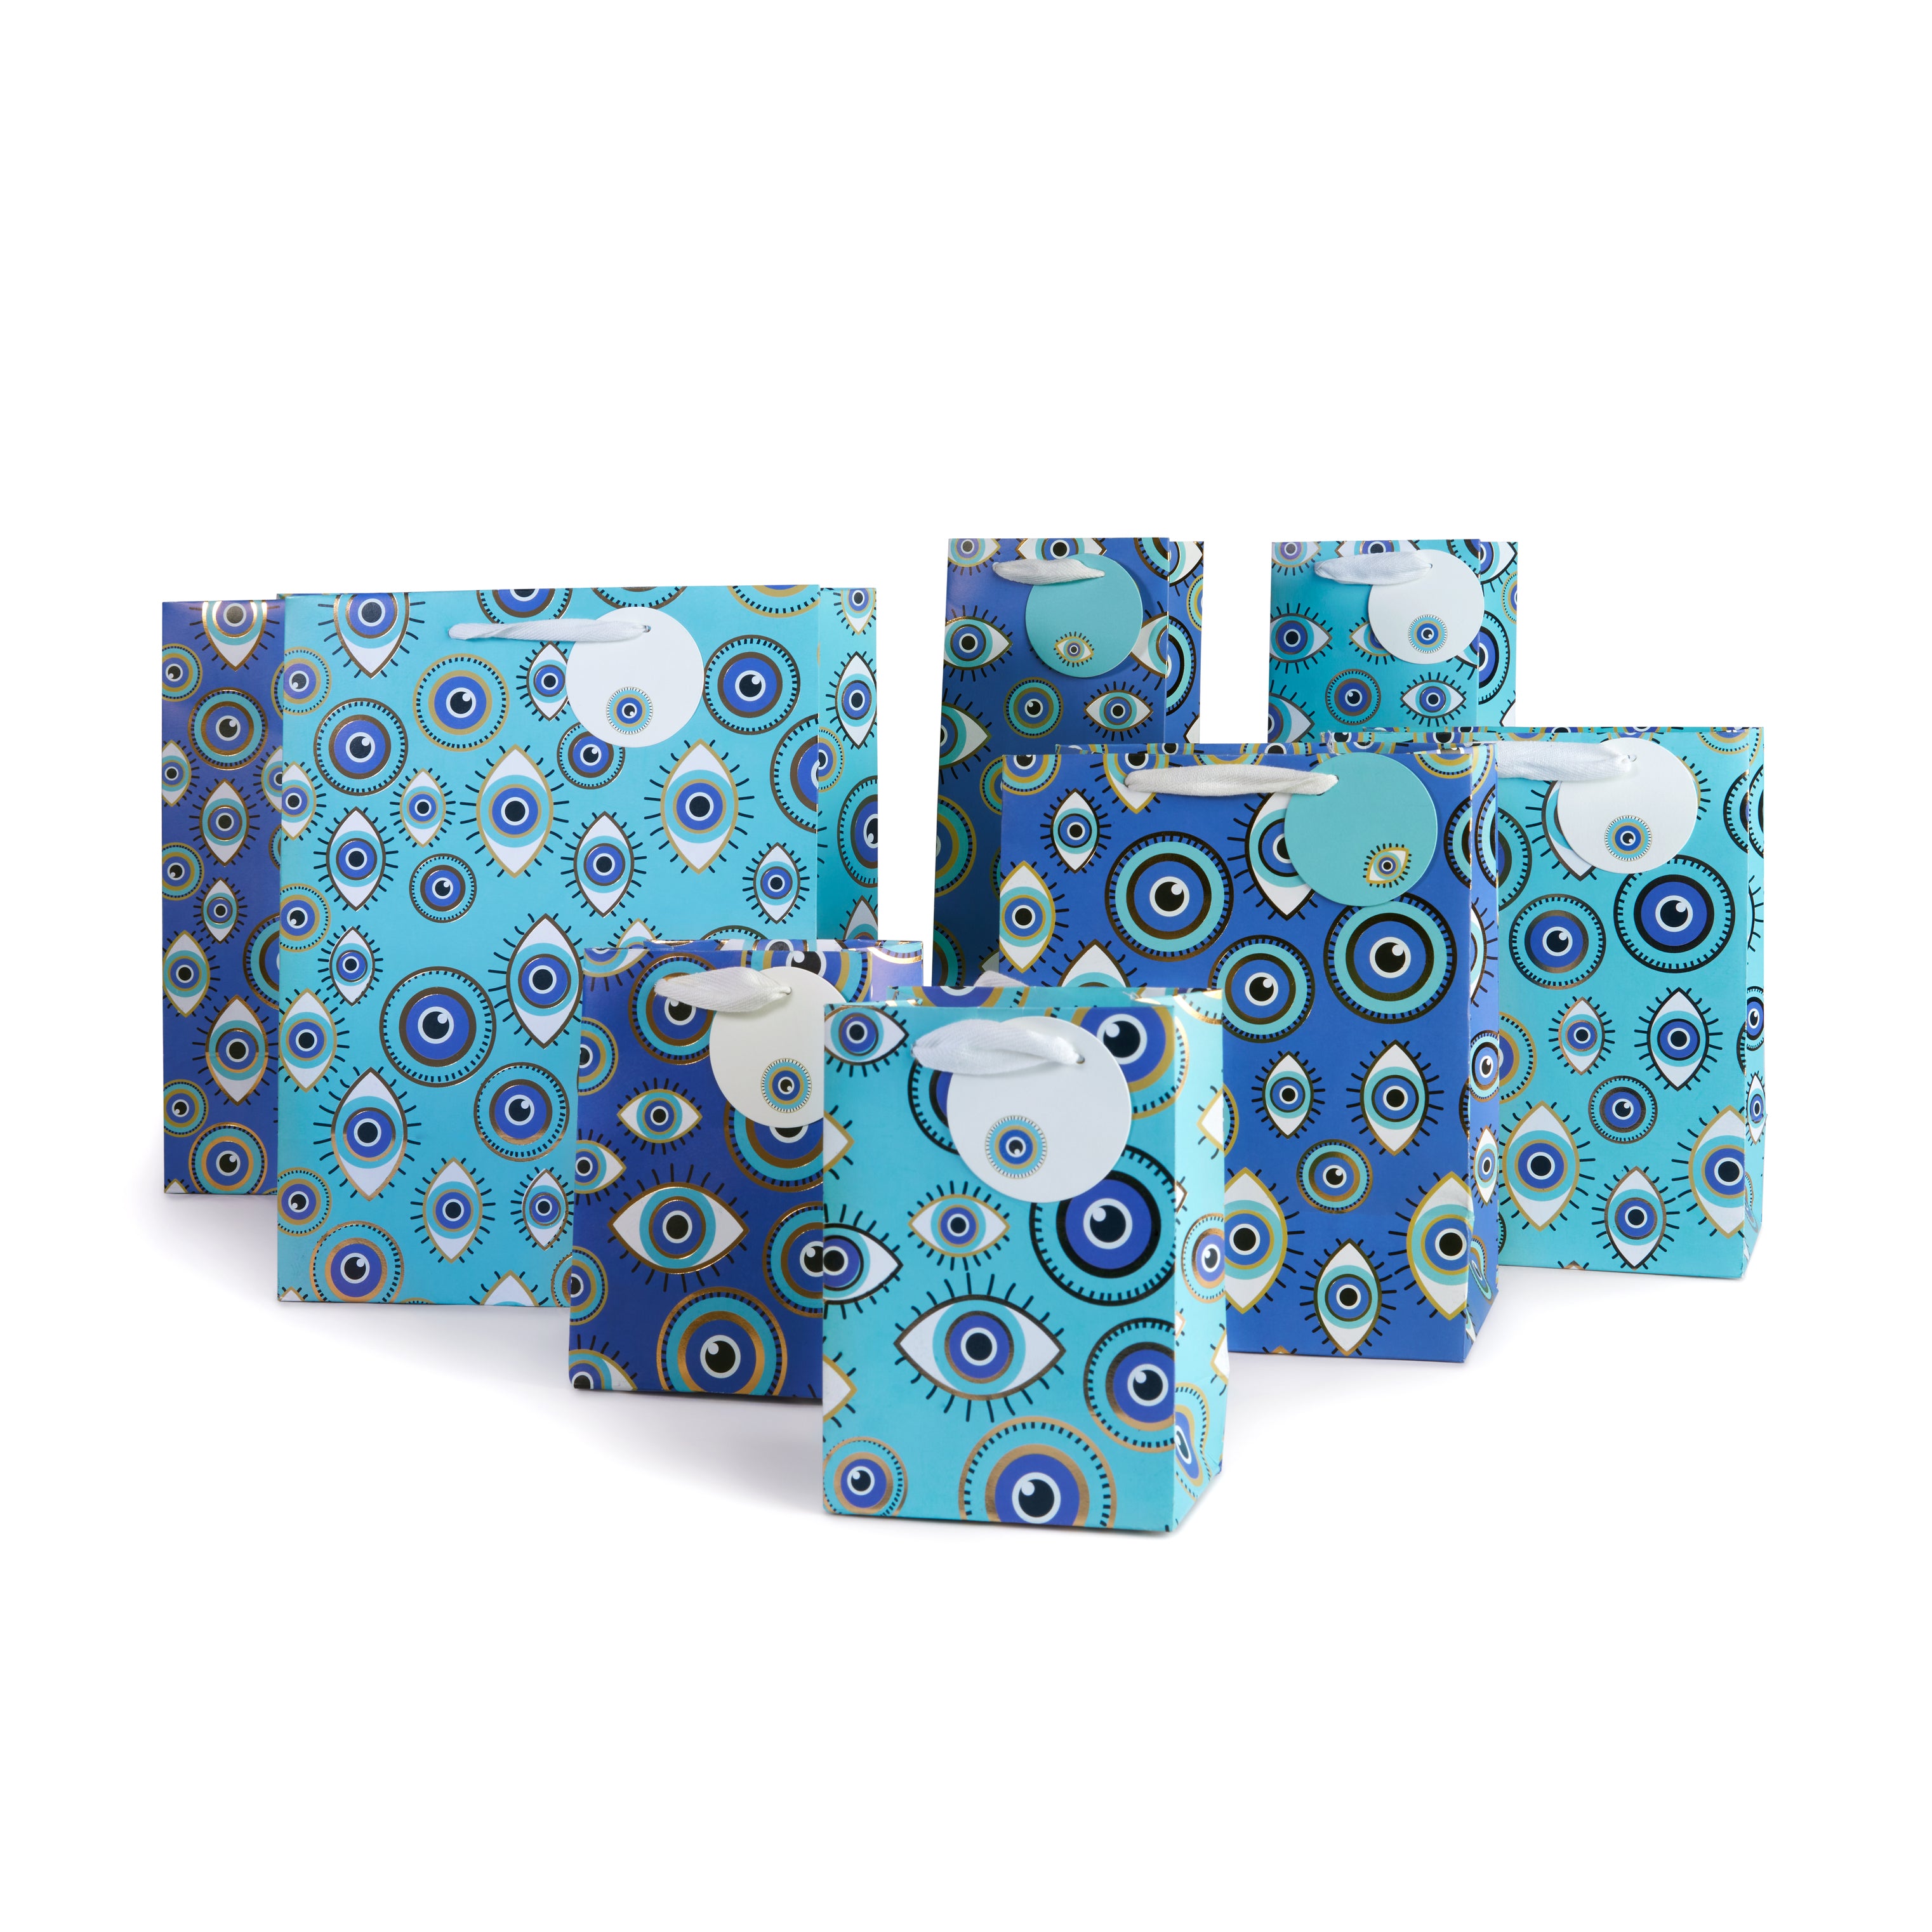 Evileye Medium Gift Bags (Blue)